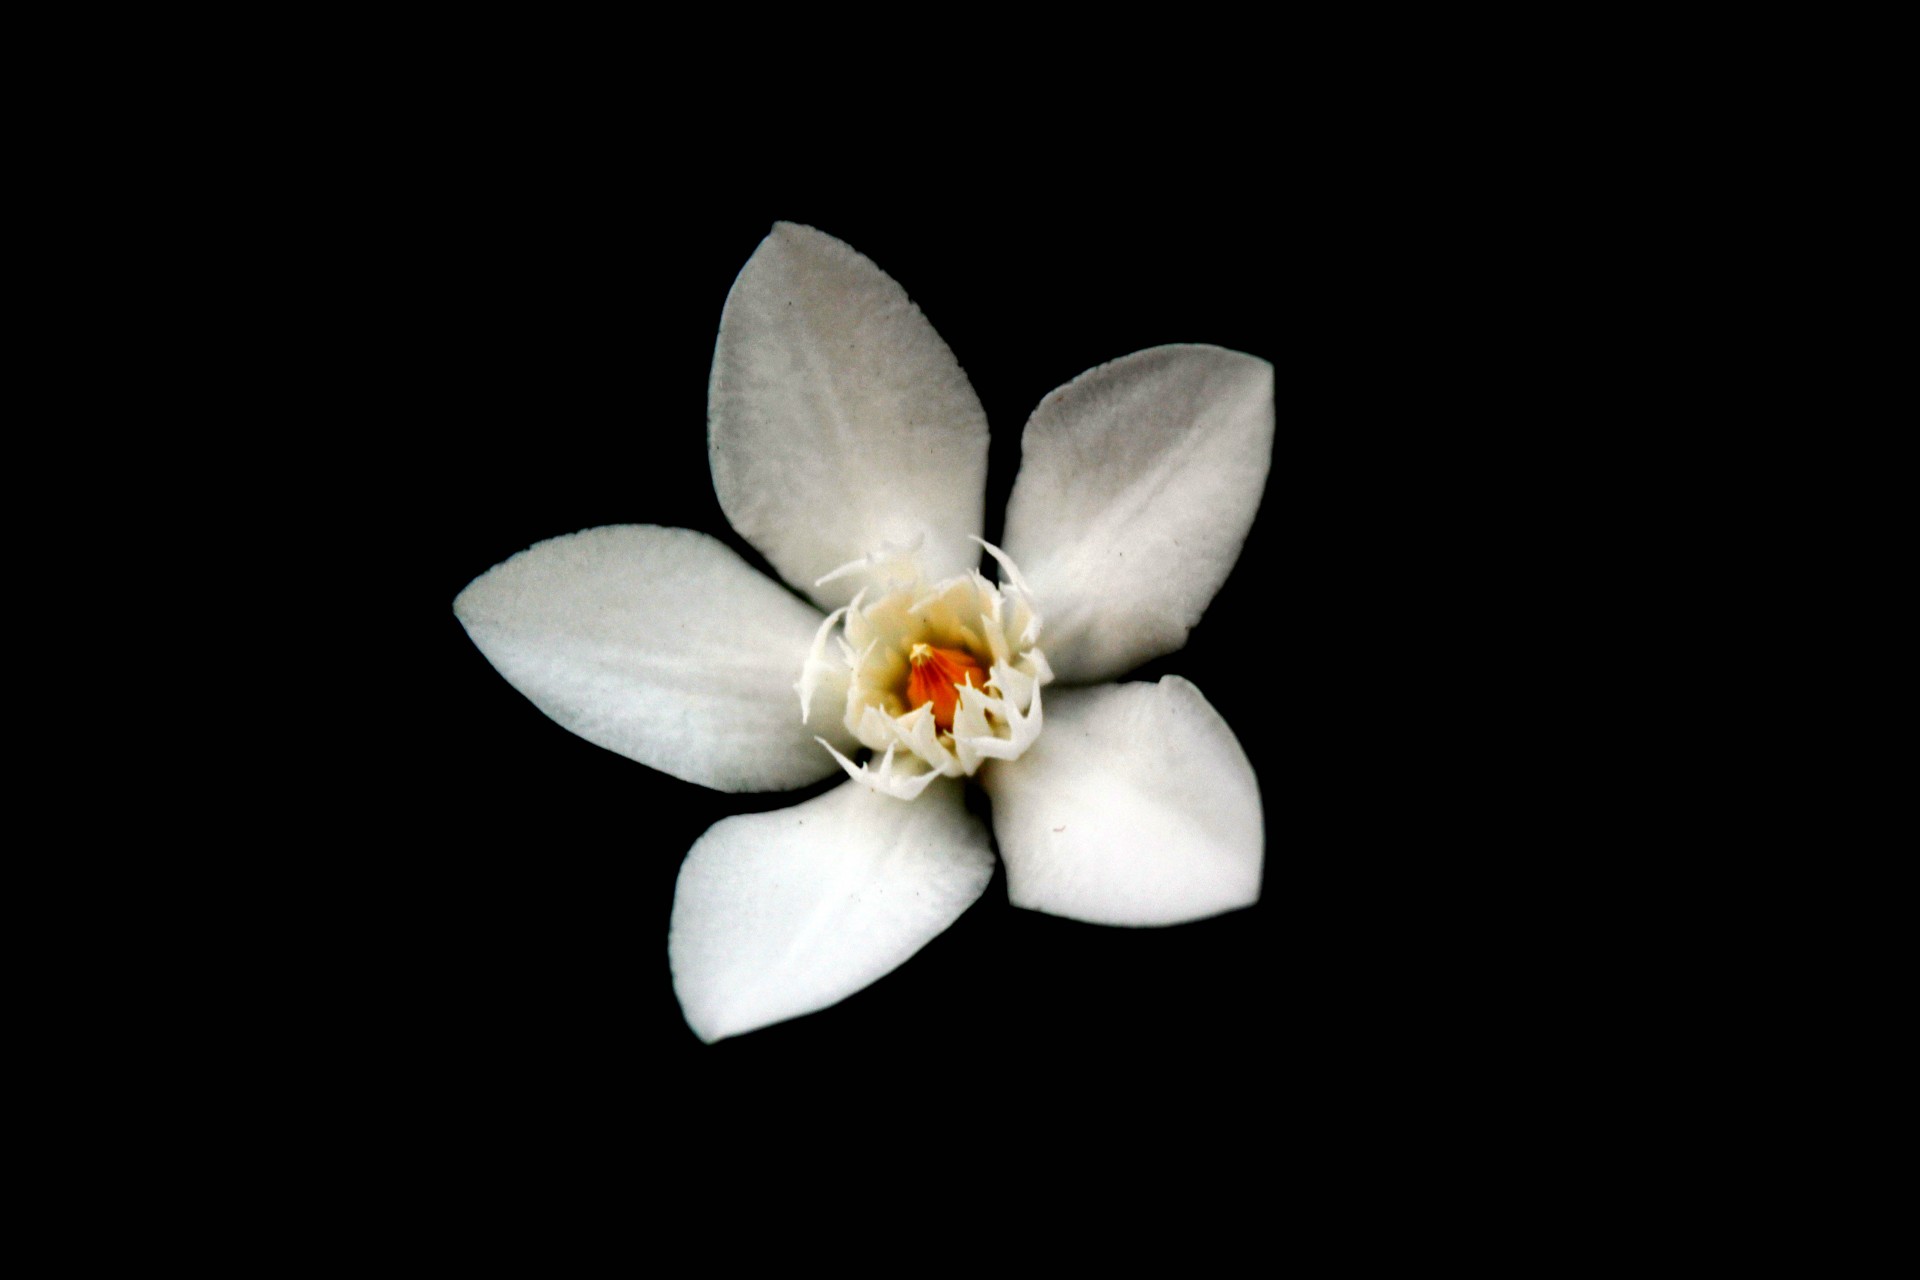 Floare alb